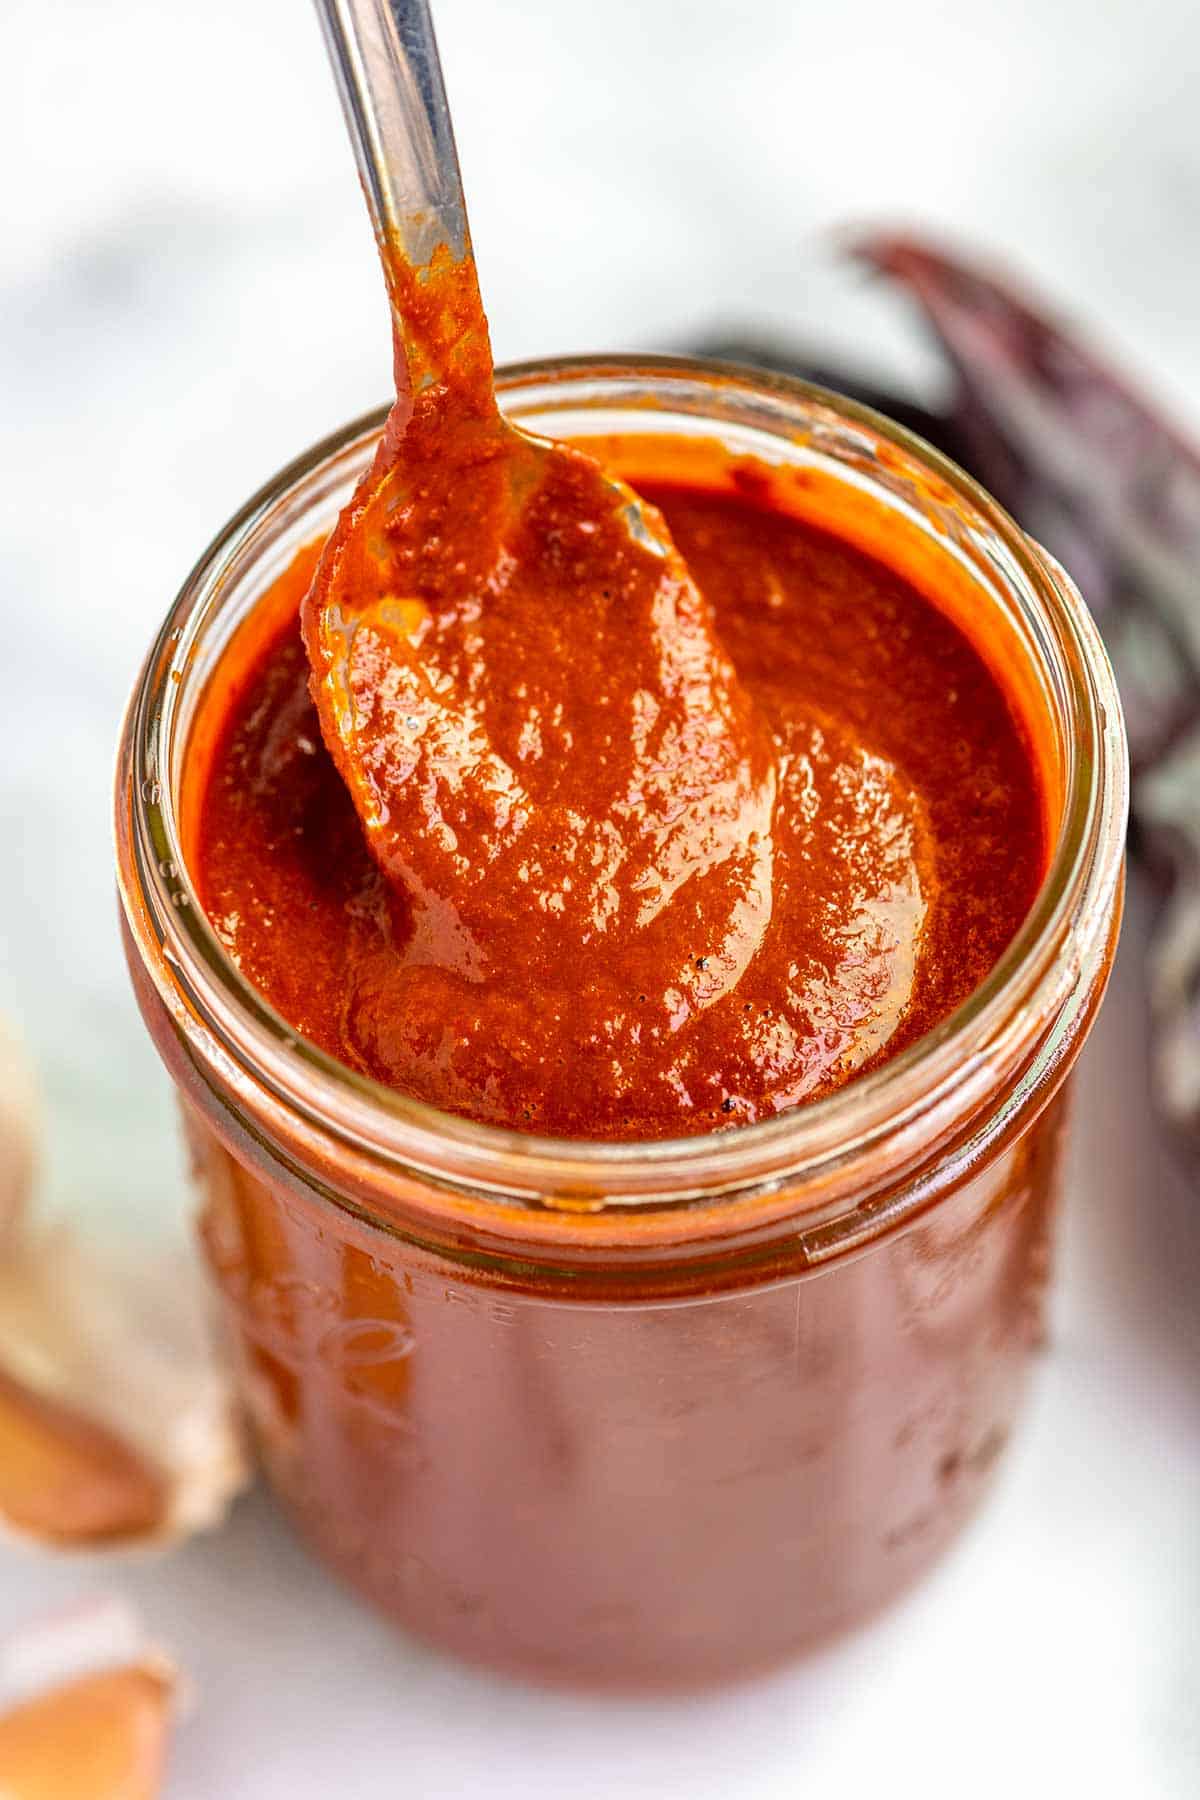 Homemade enchilada sauce